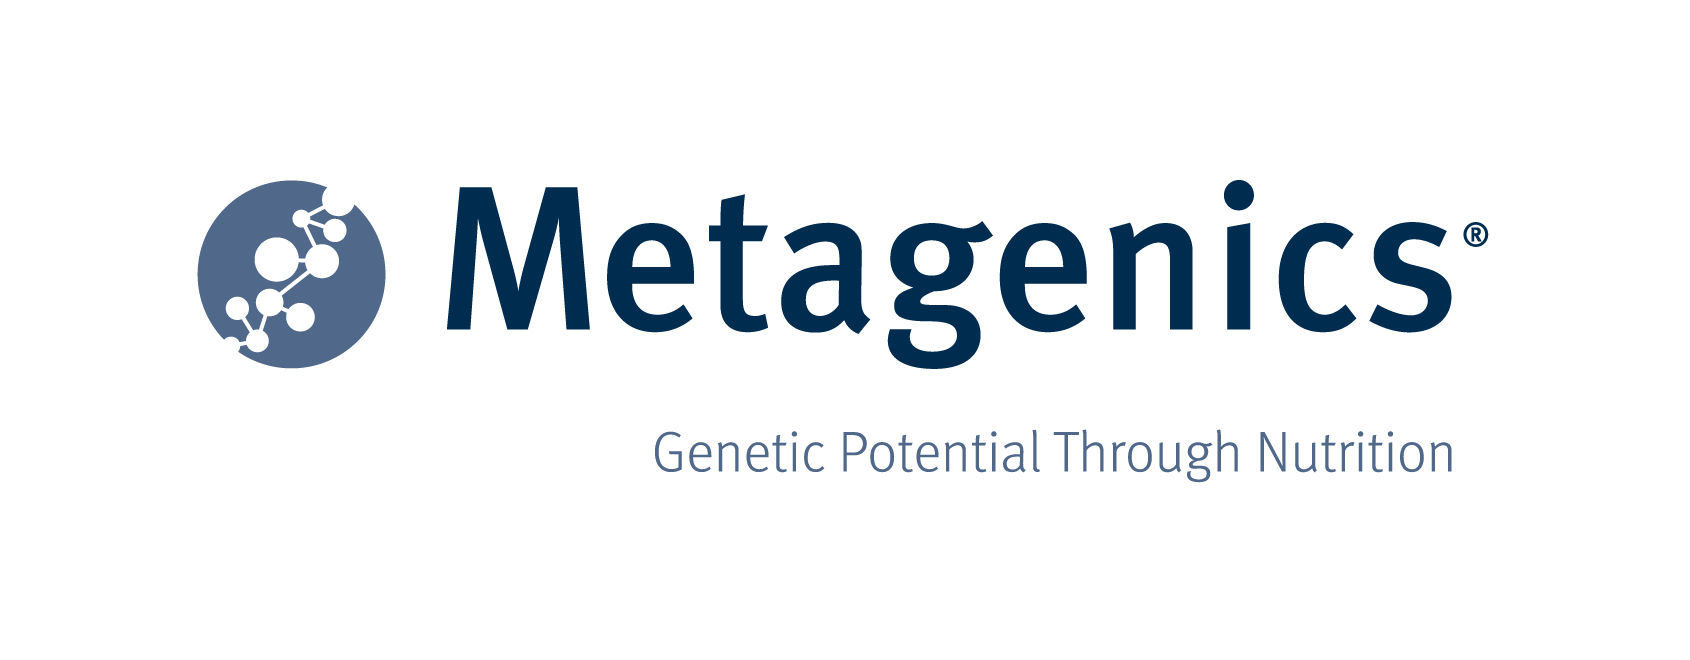 Metagenics_trans